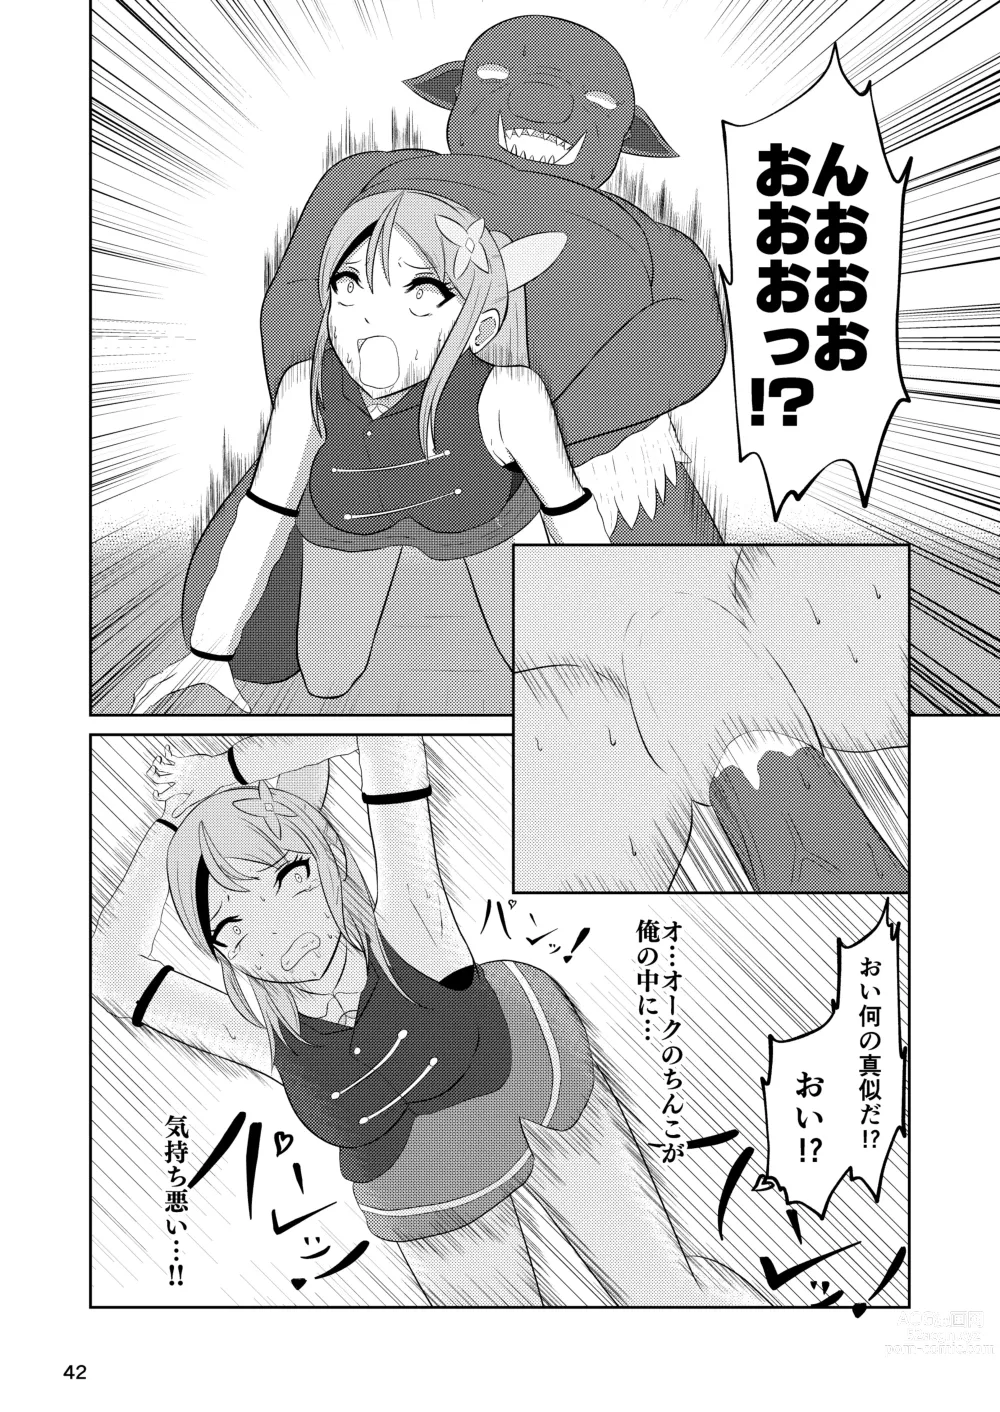 Page 41 of doujinshi Hime to Kishi  wa Nukarumi ni Kawaru